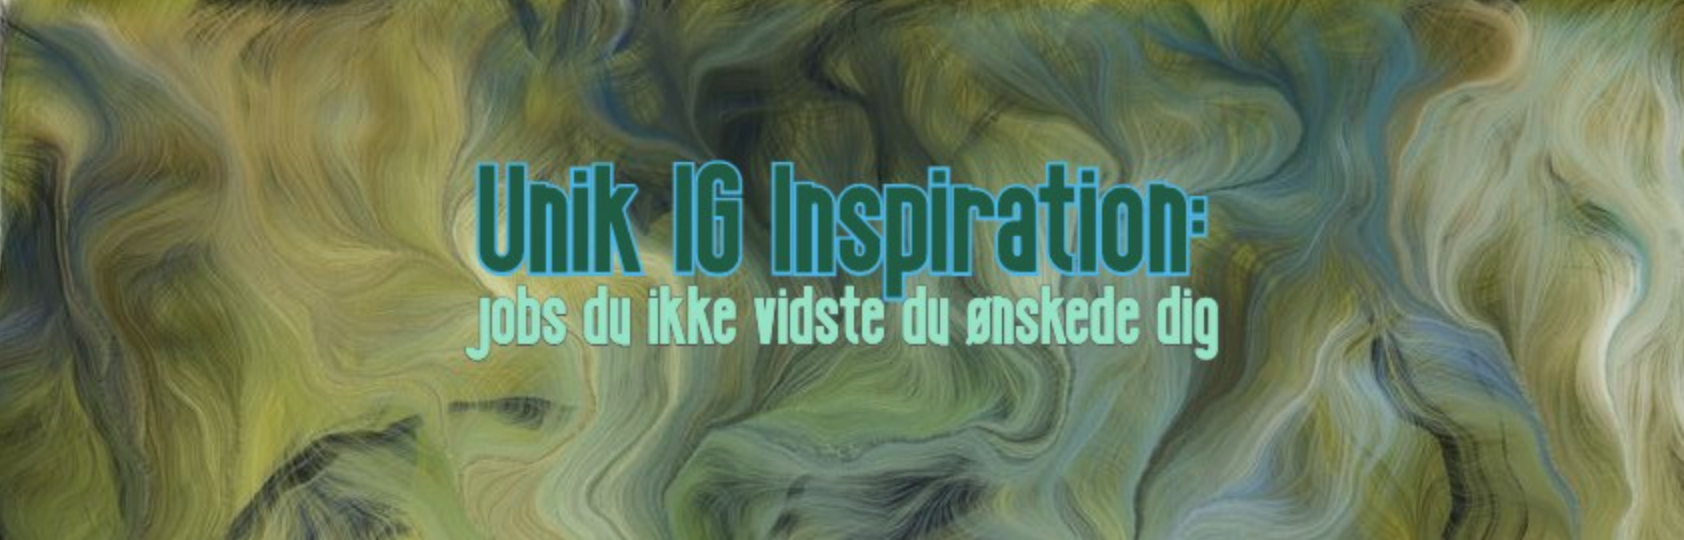 Unik IG Inspiration: Jobs